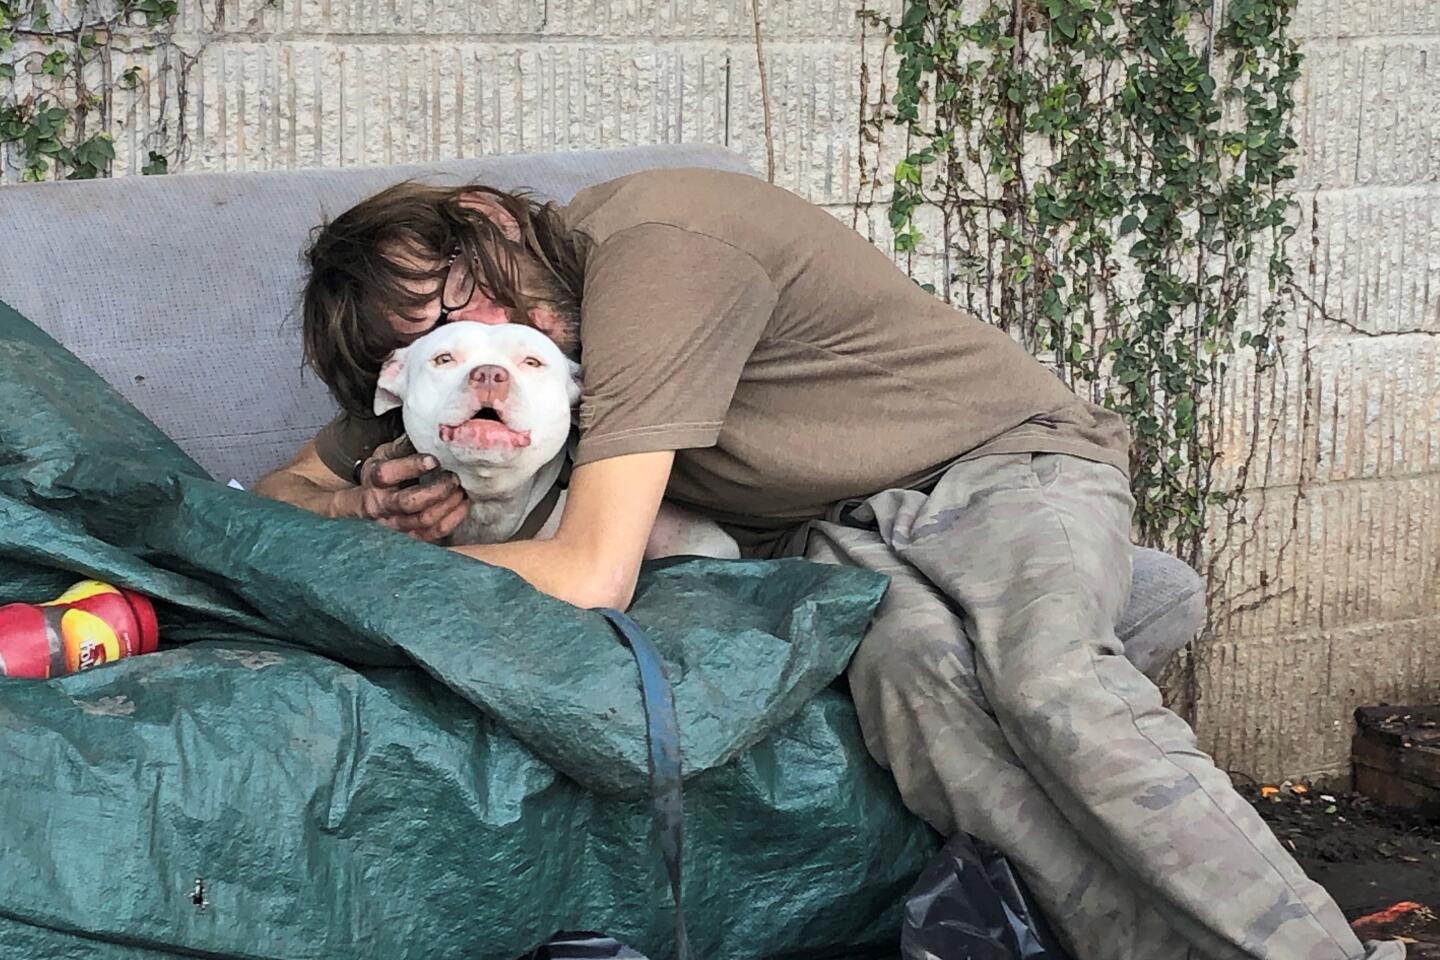 Joe Rodata homeless encampment, Sonoma County